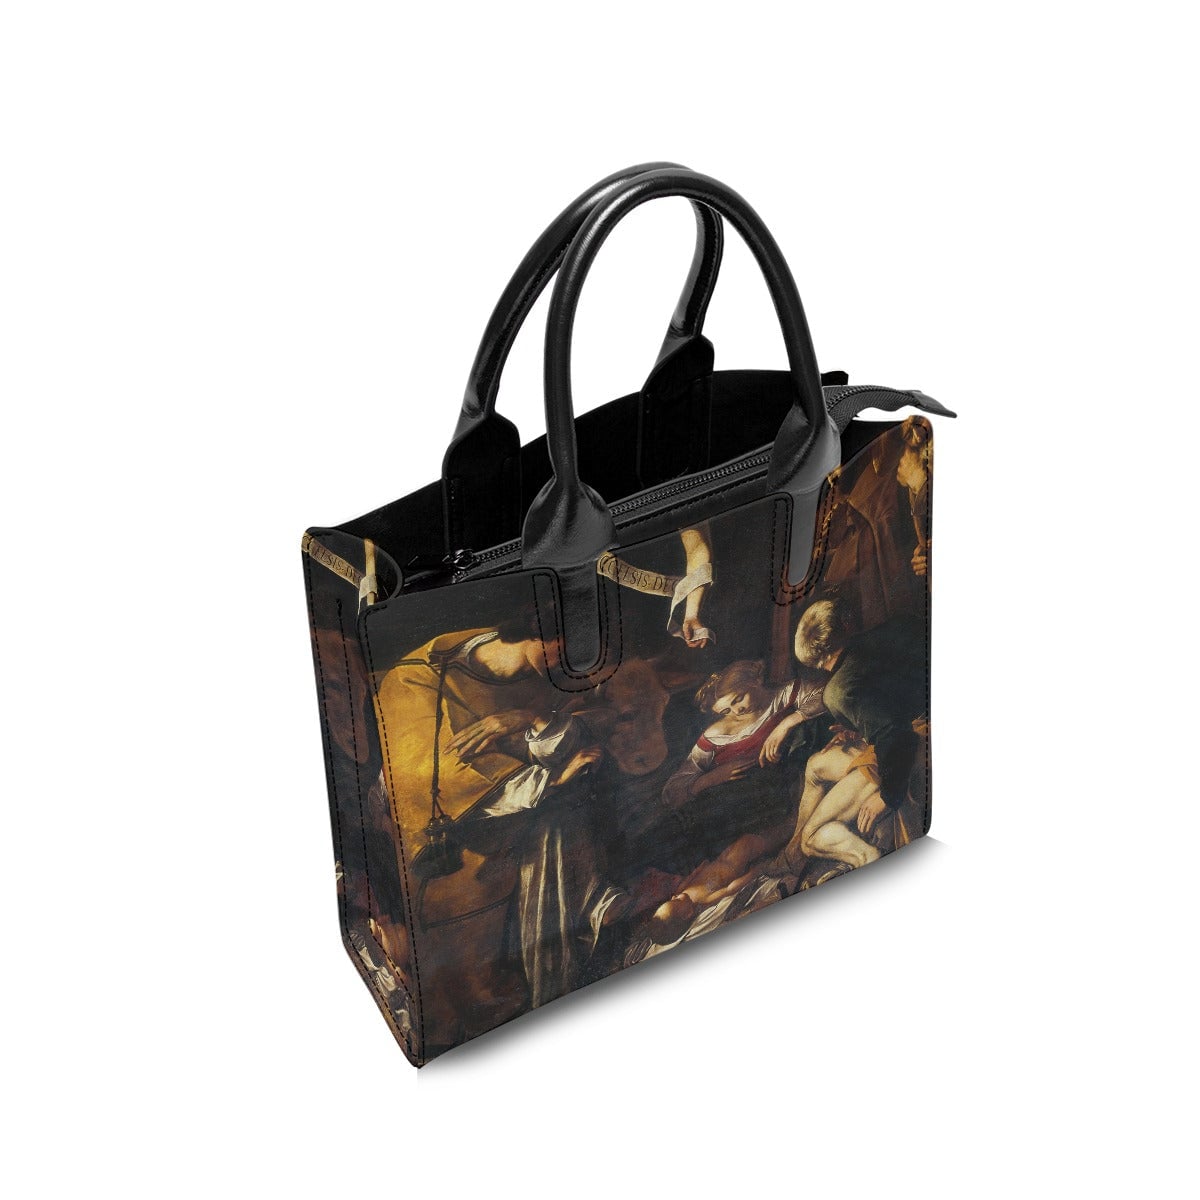 Nativity by Caravaggio Art Baroque painting Handbag